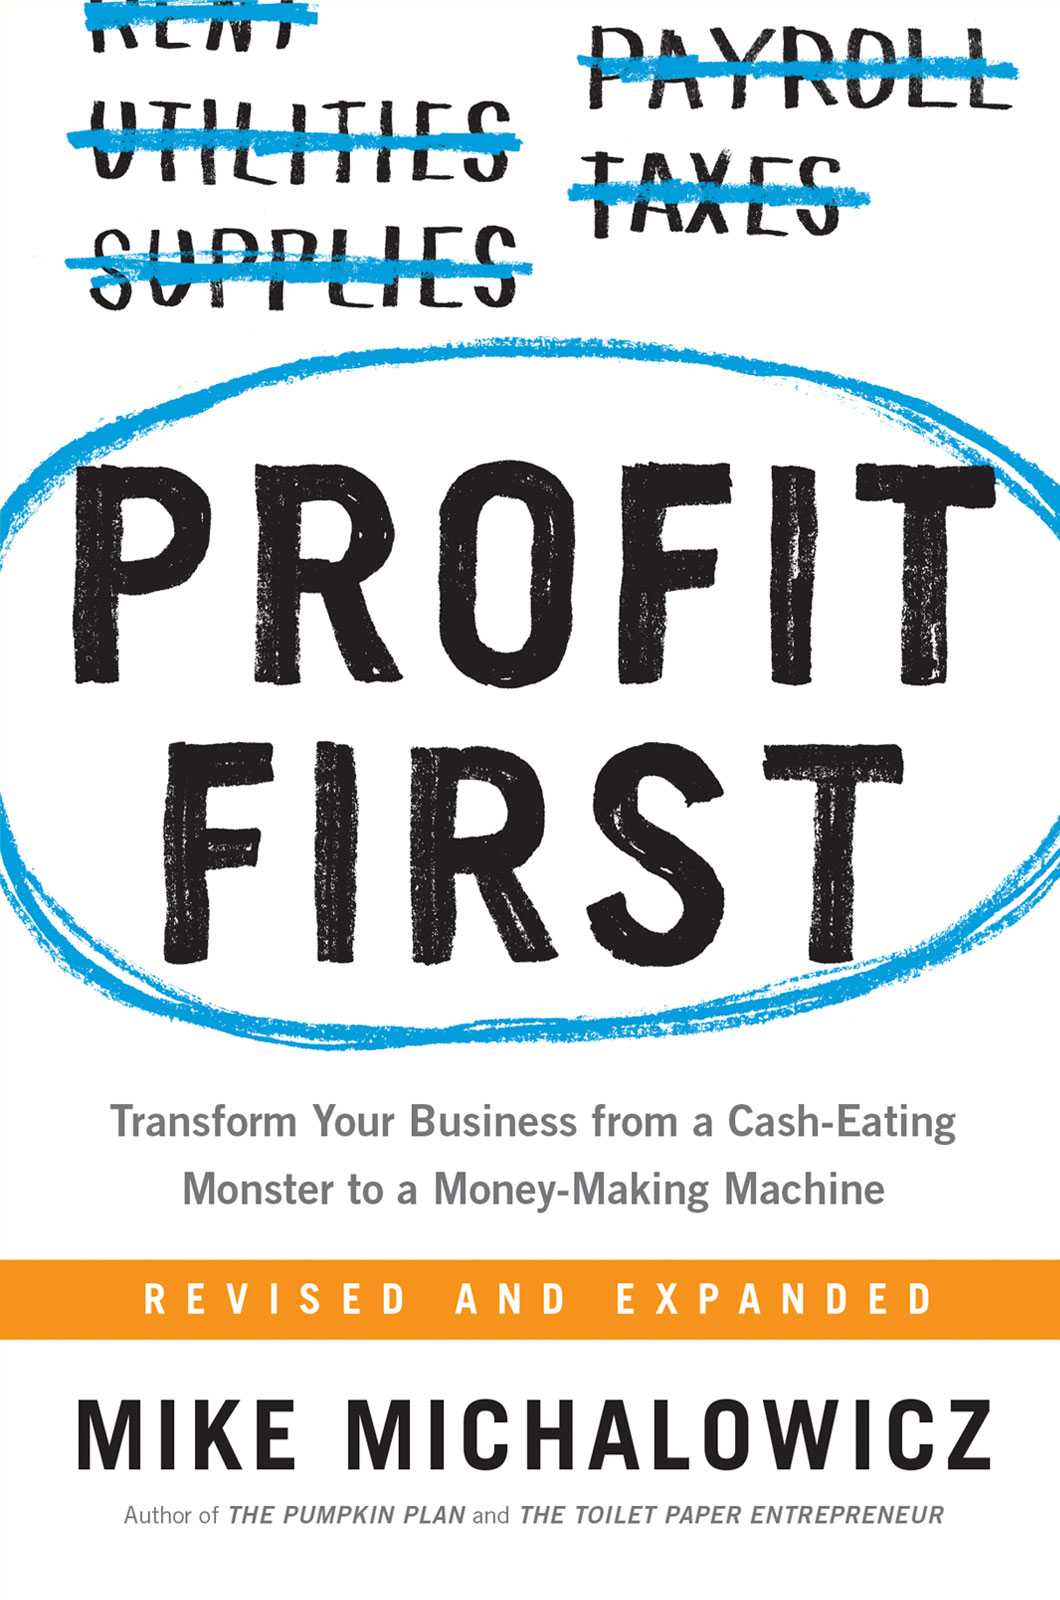 profit-first